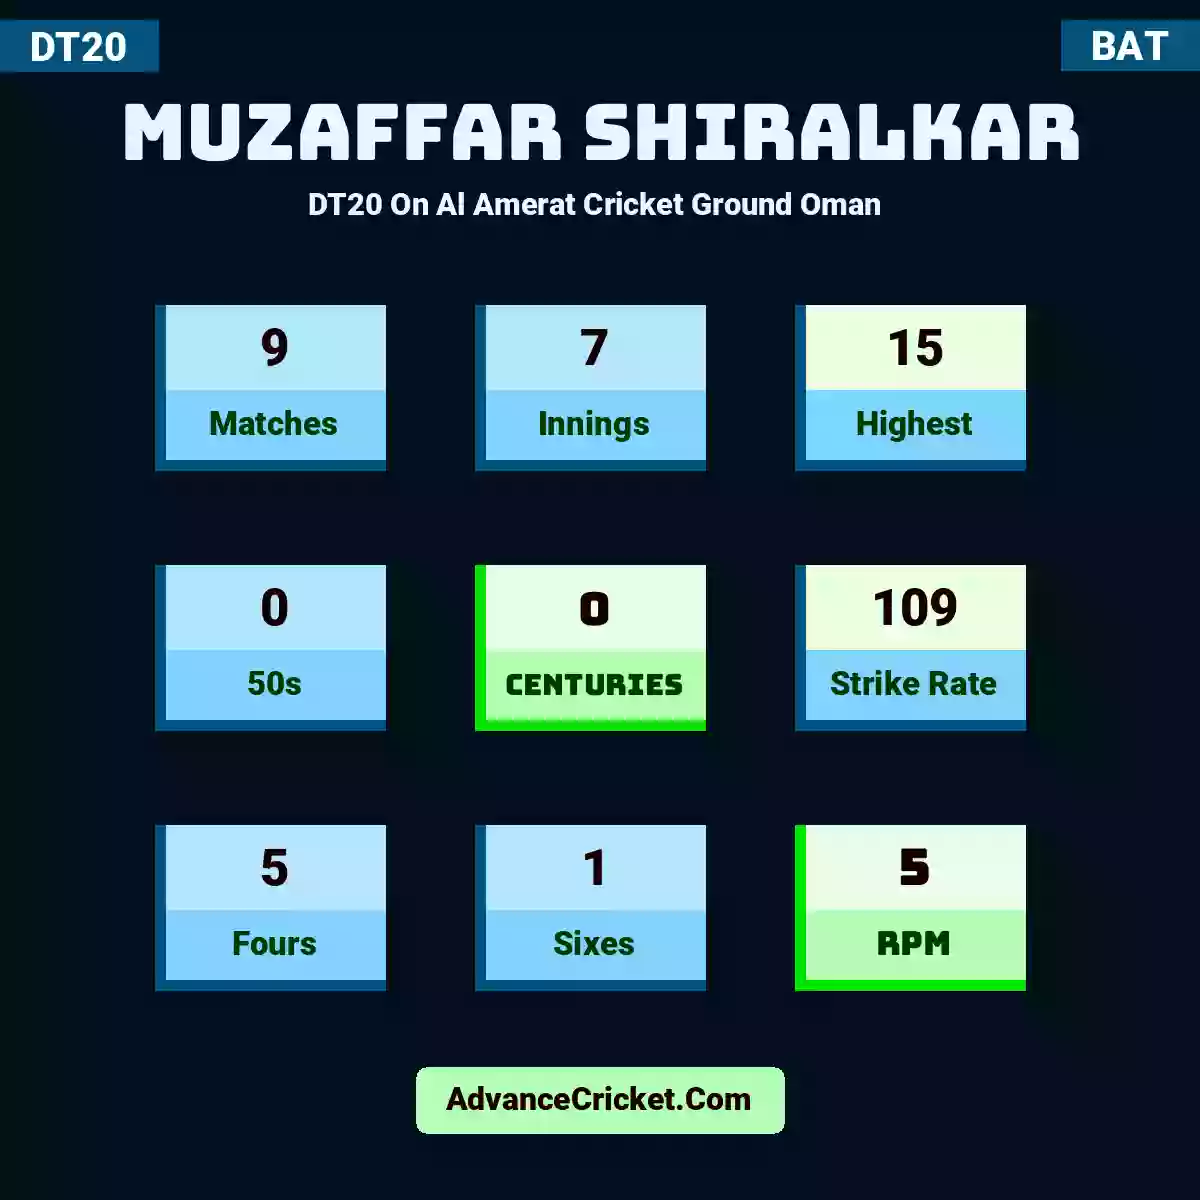 Muzaffar Shiralkar DT20  On Al Amerat Cricket Ground Oman , Muzaffar Shiralkar played 9 matches, scored 15 runs as highest, 0 half-centuries, and 0 centuries, with a strike rate of 109. M.Shiralkar hit 5 fours and 1 sixes, with an RPM of 5.